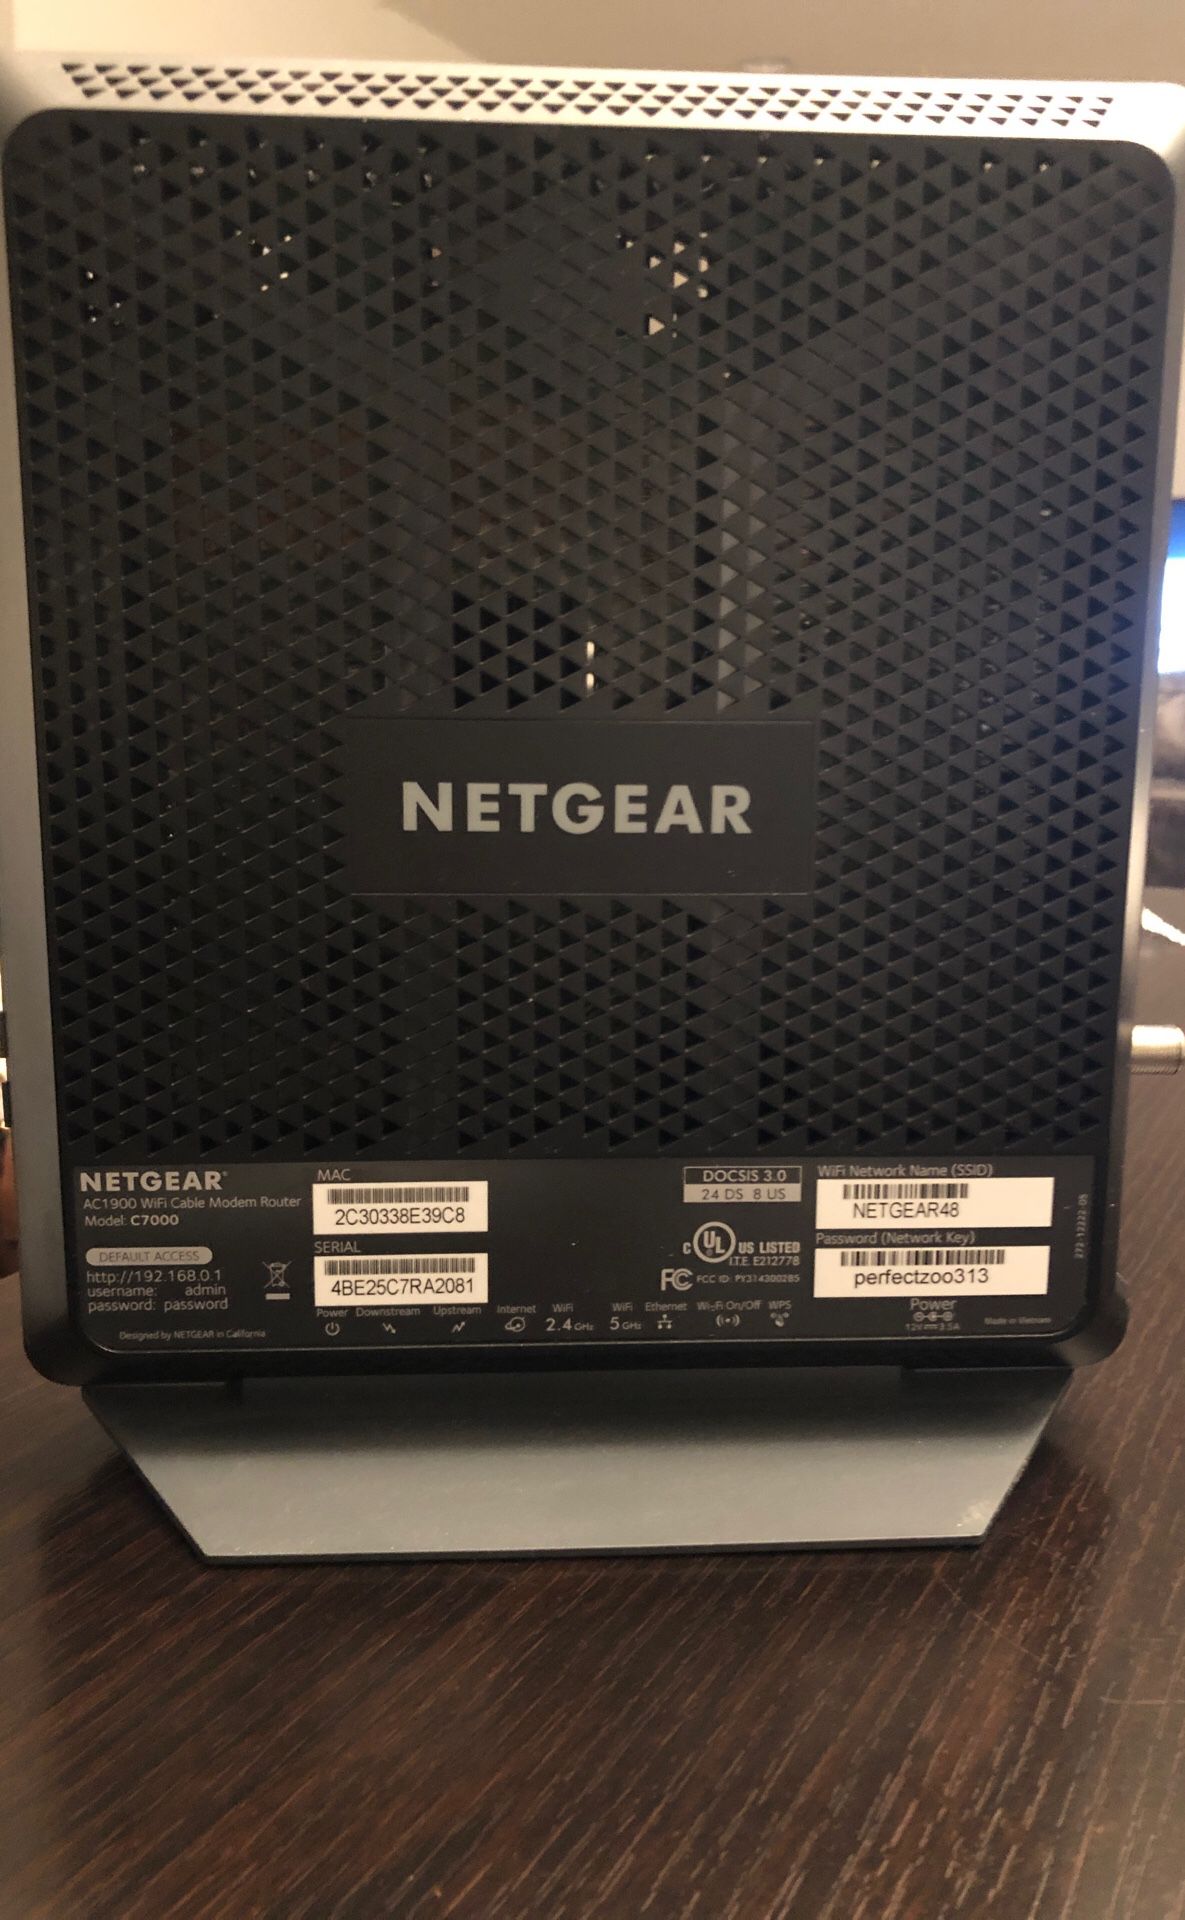 Netgear nighthawk AC1900 WiFi modem router